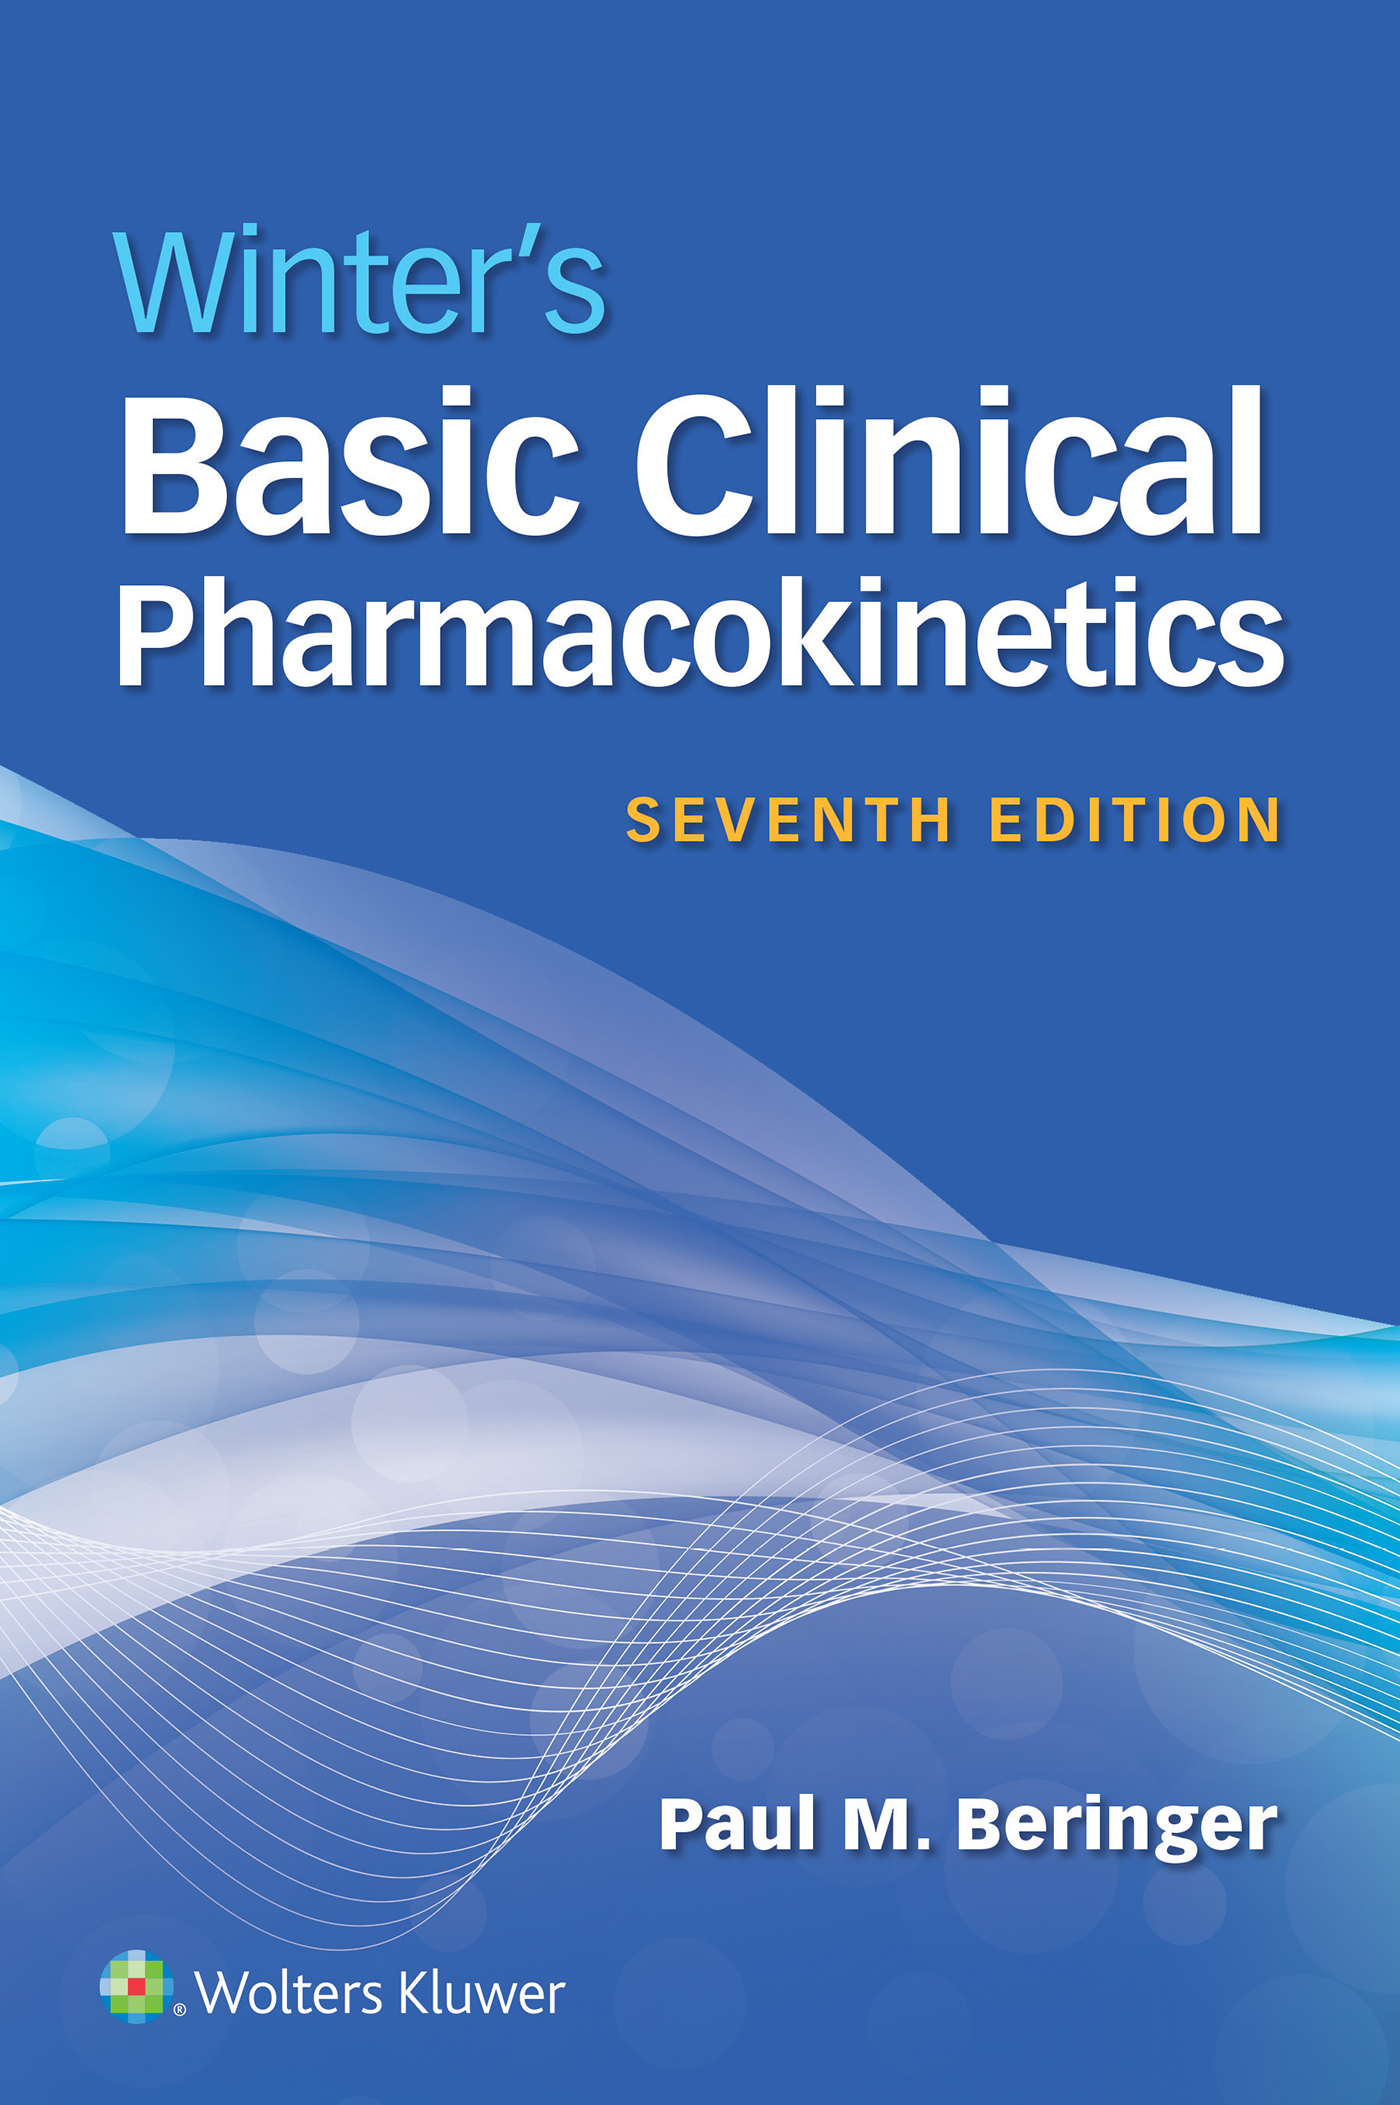 Winter's Basic Clinical Pharmacokinetics, 7th ed.